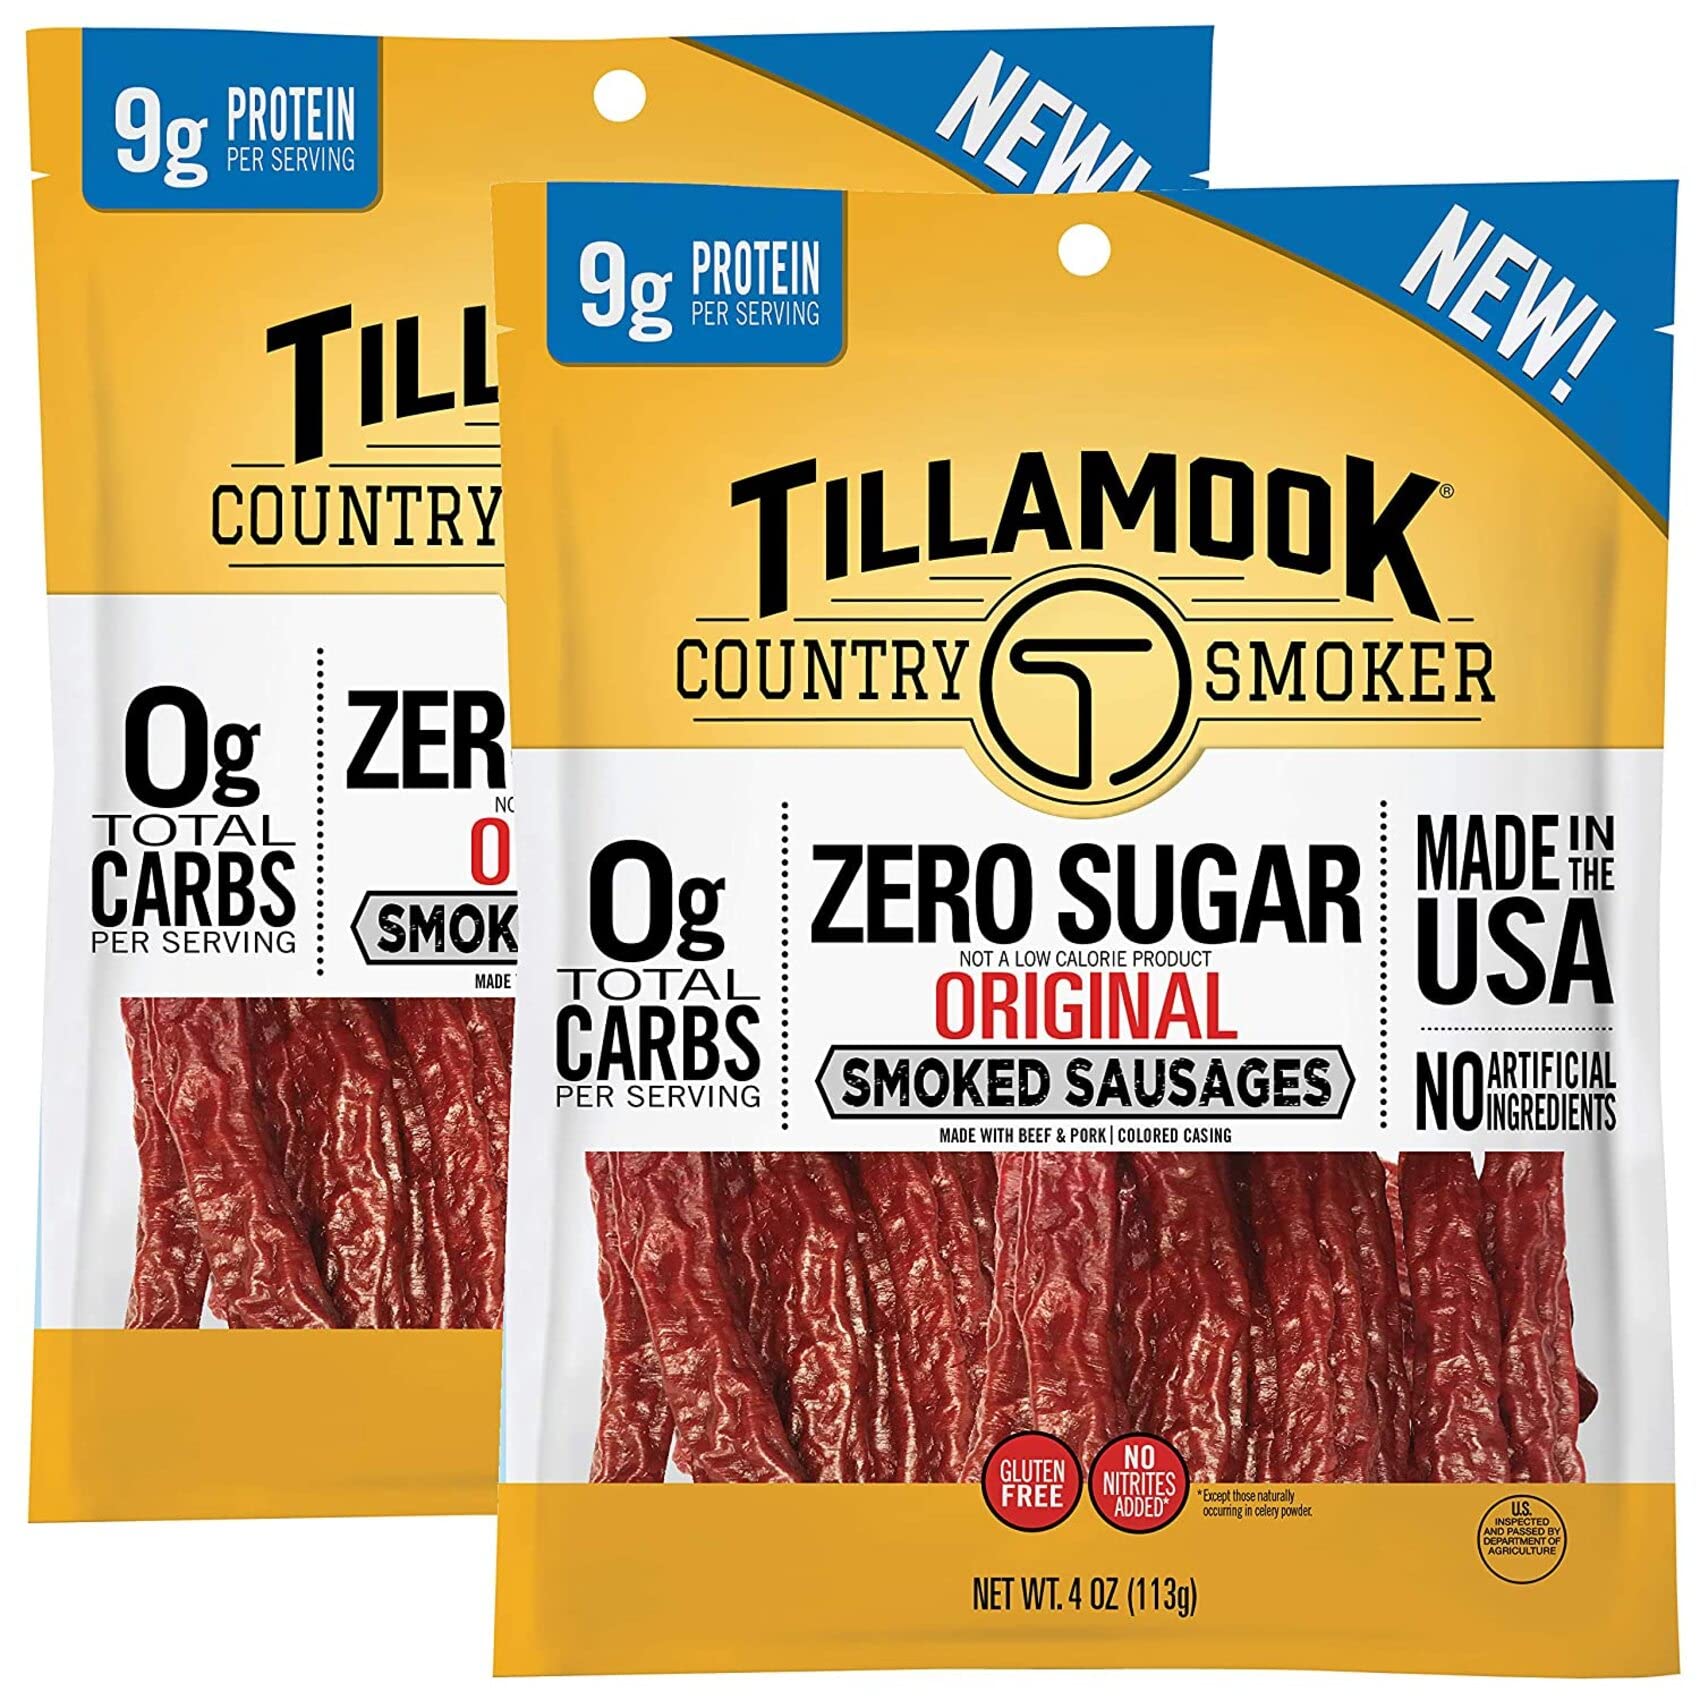 Tillamook Country Smoker Keto Friendly Zero Sugar Smoked Sausages, Original, 4 Ounce (Pack of 2)~$6.98 After Coupon @ Amazon~Free Prime Shipping!